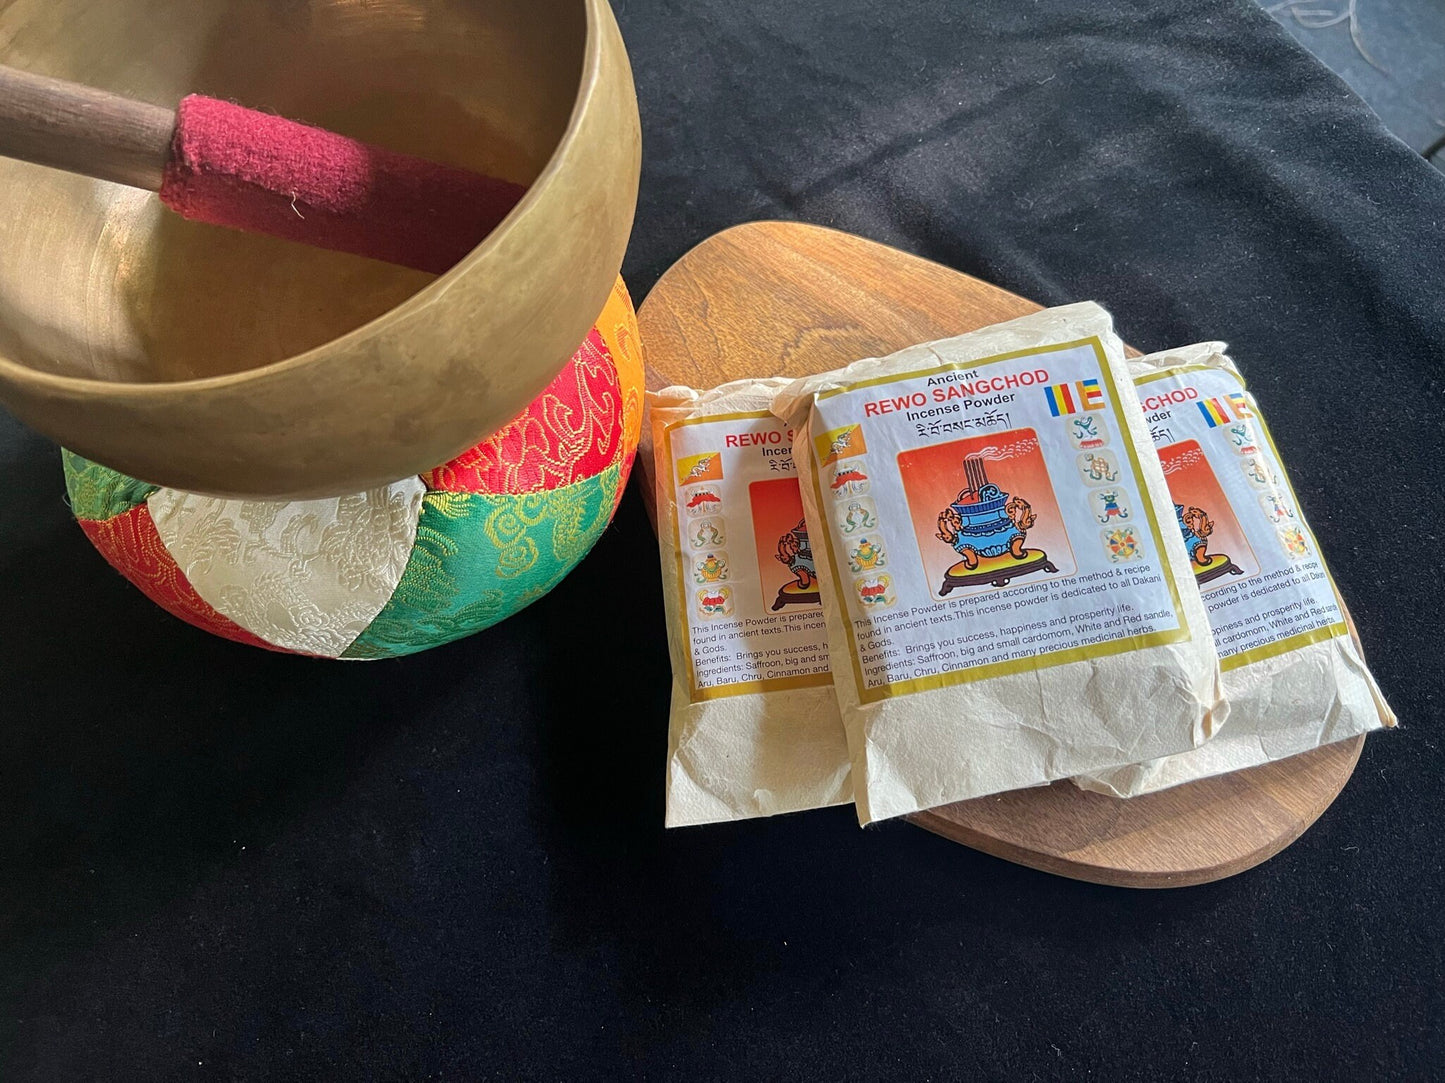 Bhutanese Riwo Sangcho Powder| Bhutanese Incense Powder | 80 grams | Rewo Sangchod